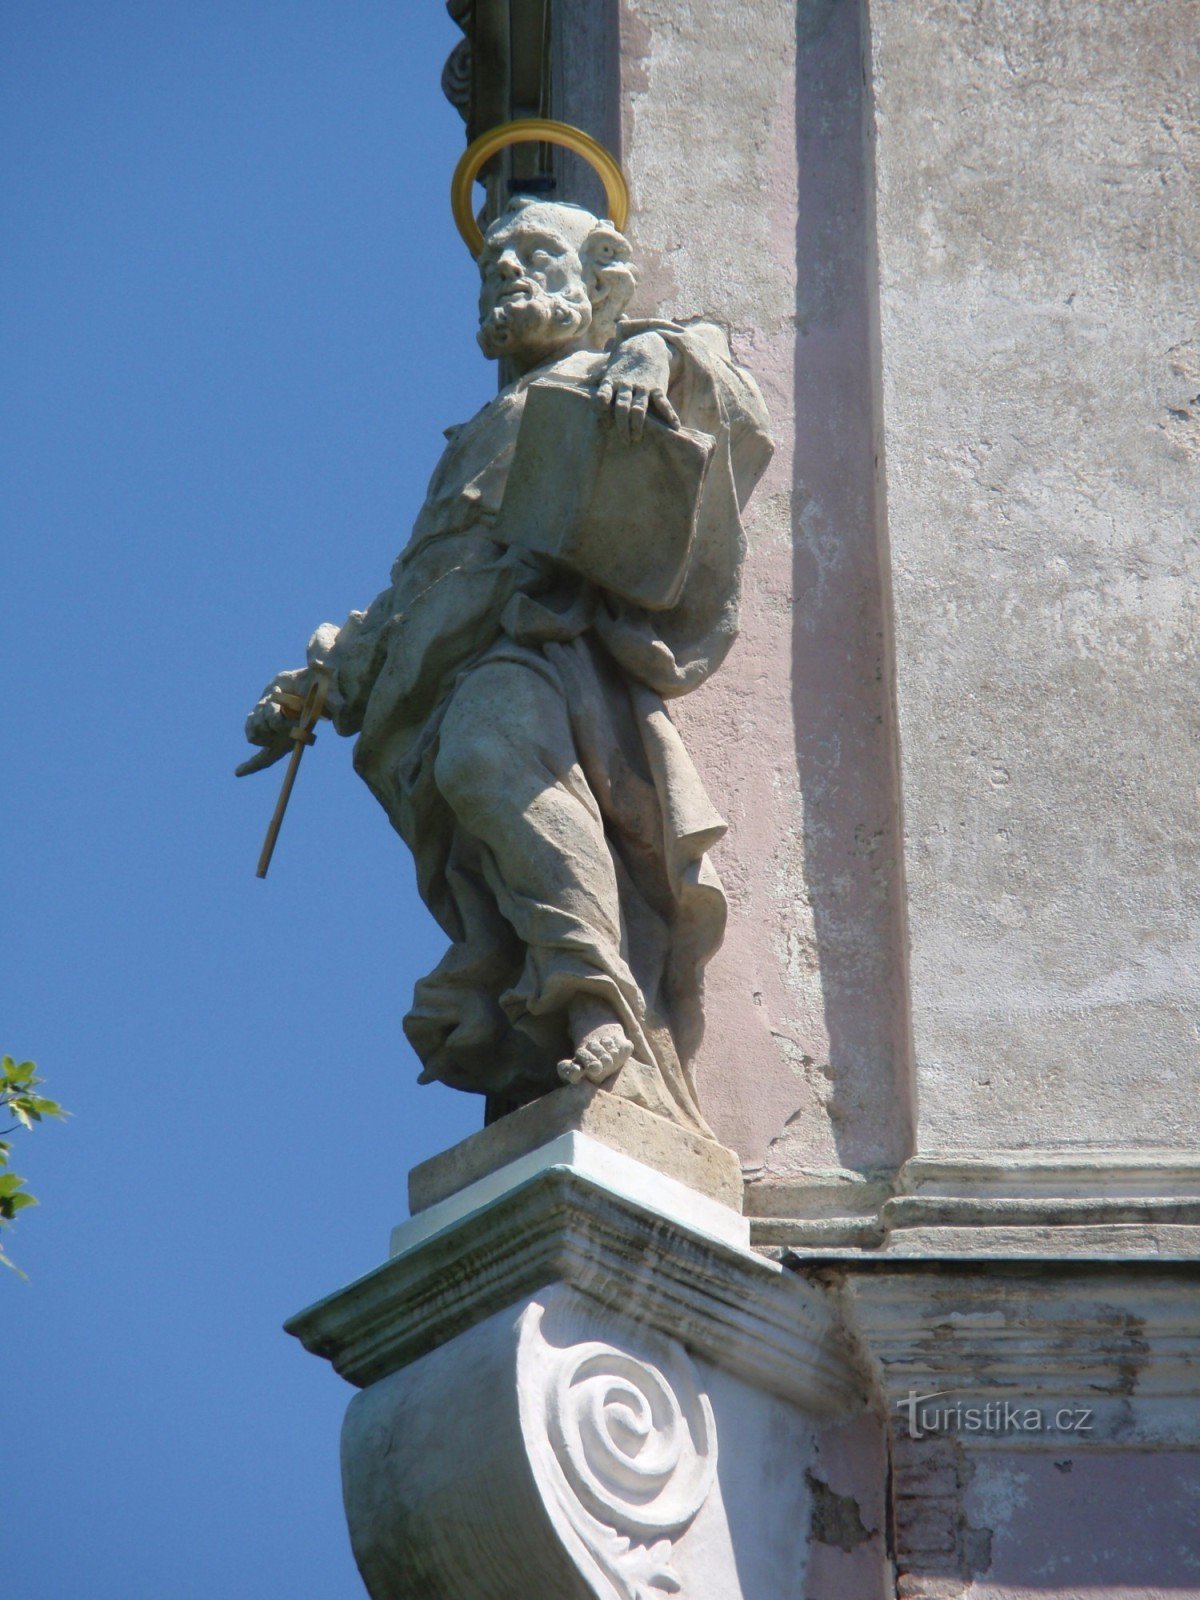 Statues of Alexander Jelínek in Tasov